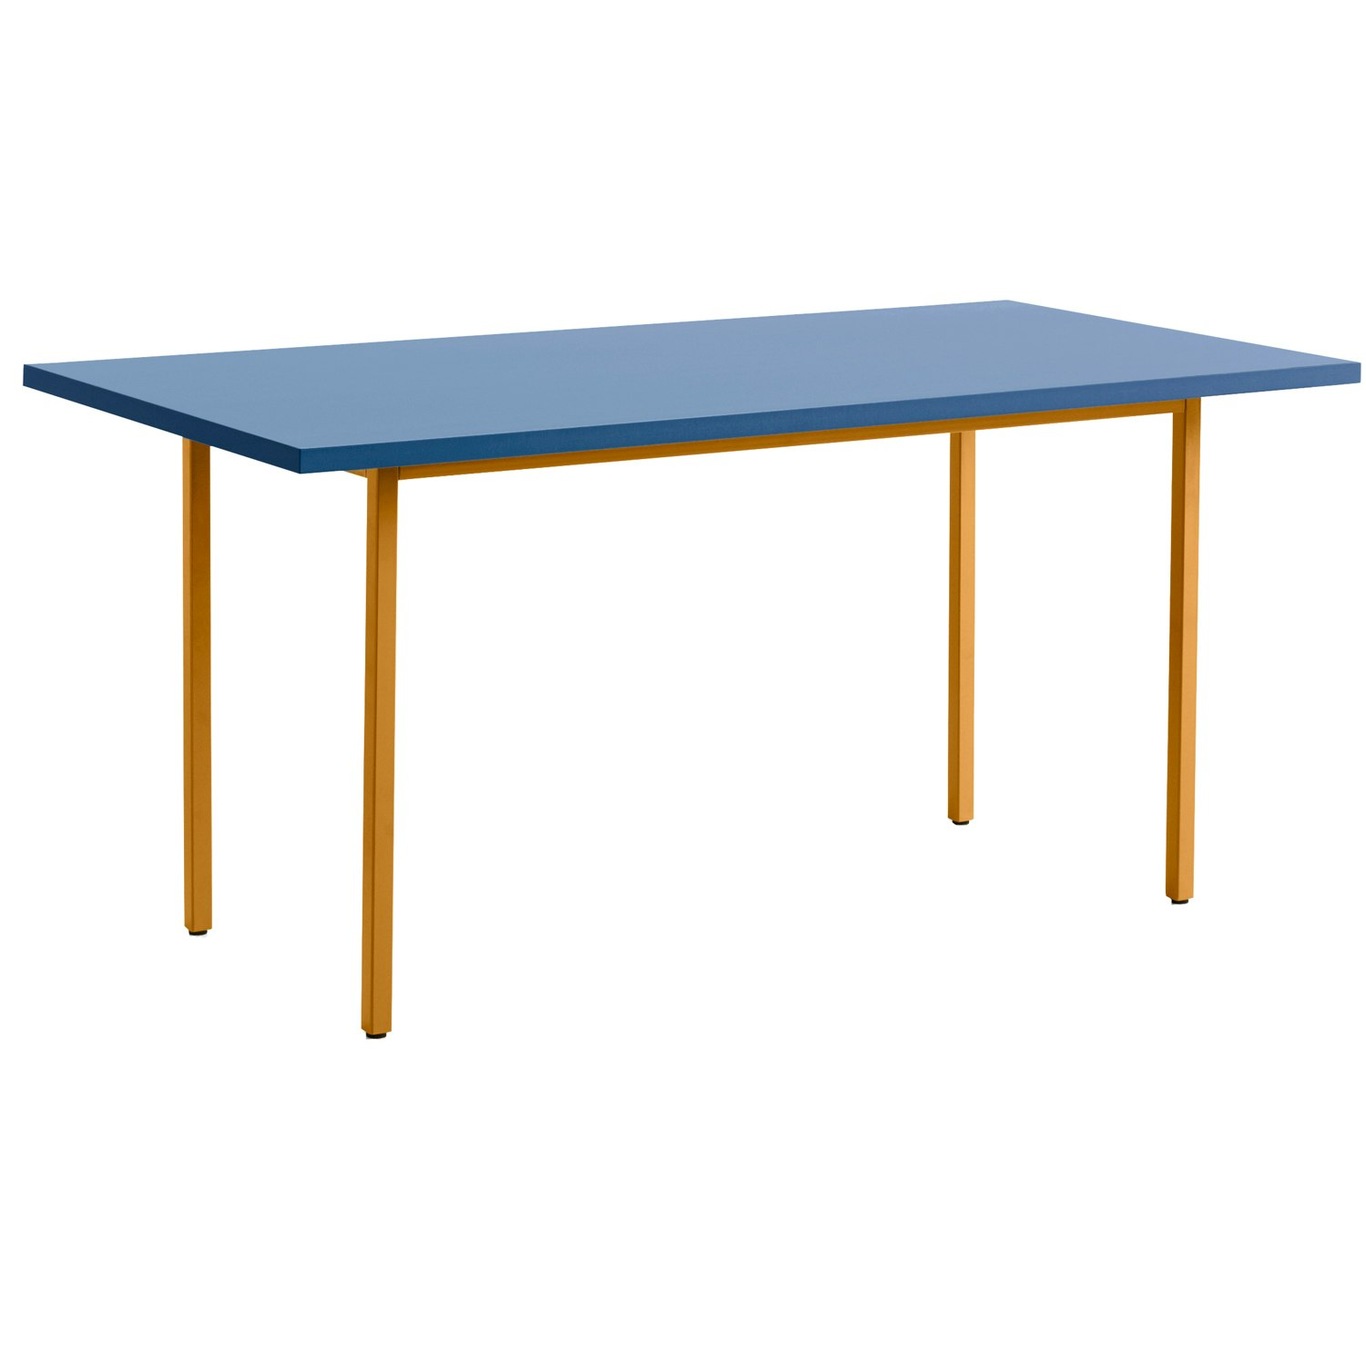 Two-Colour Table 160x82 cm, Ochre / Blue